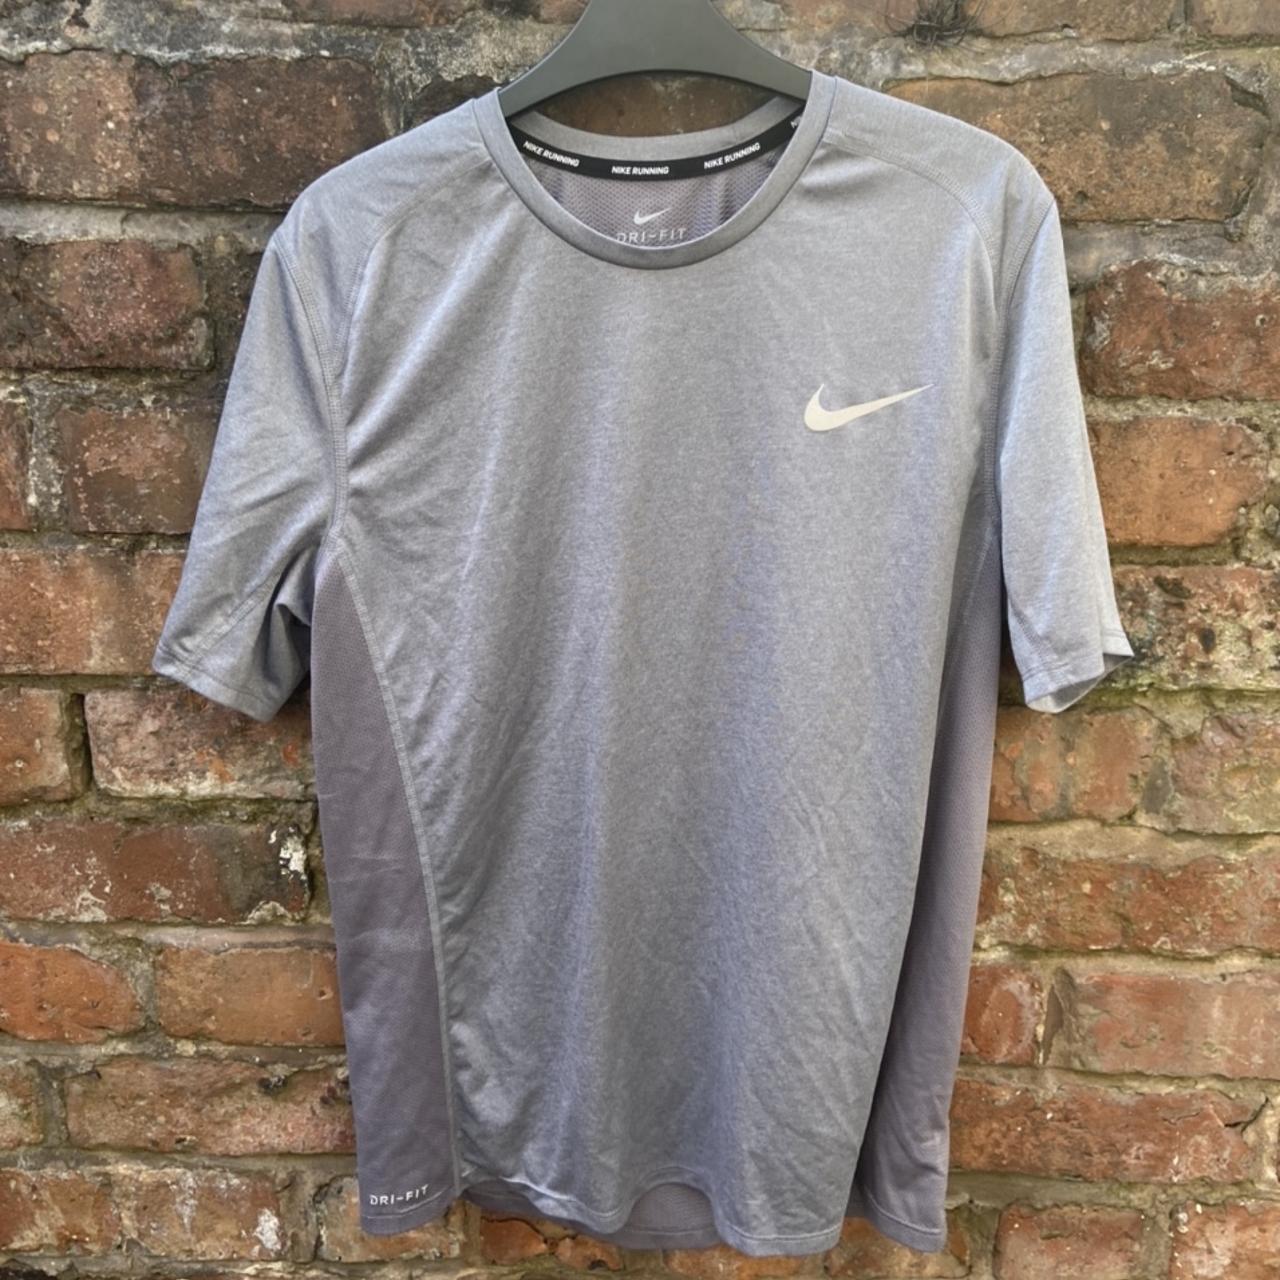 haak canvas Een zekere Nike Men's T-shirt | Depop